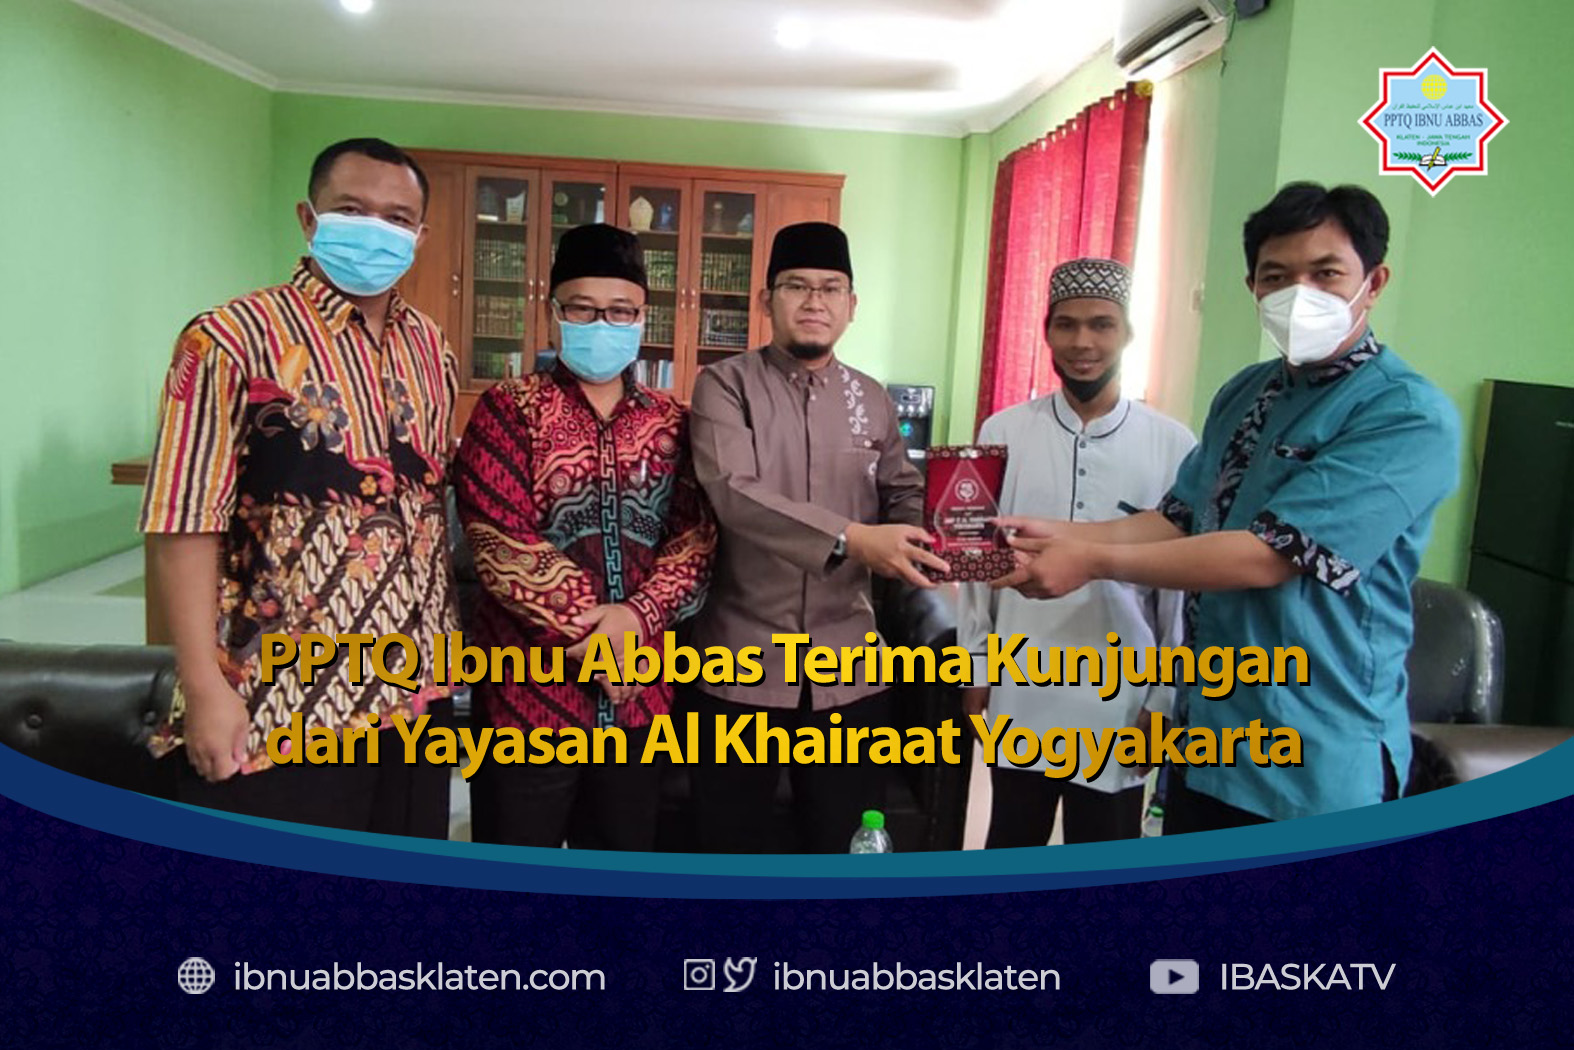 Ibnu Abbas Menerima Silaturahmi dari Yayasan Al Khairaat Yogyakarta